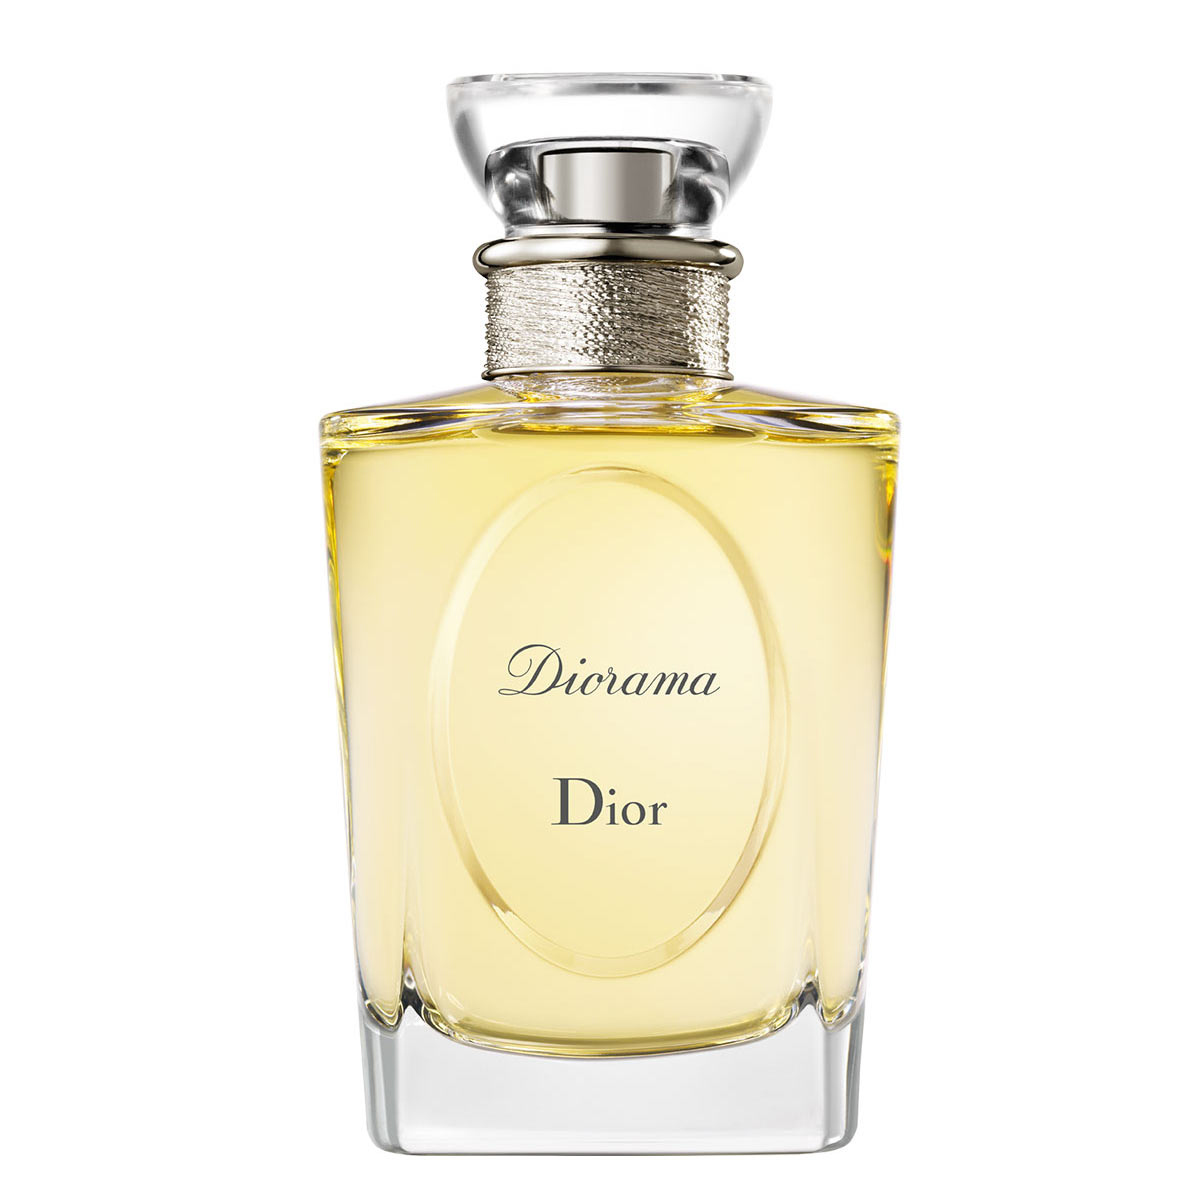 diorama dior perfume